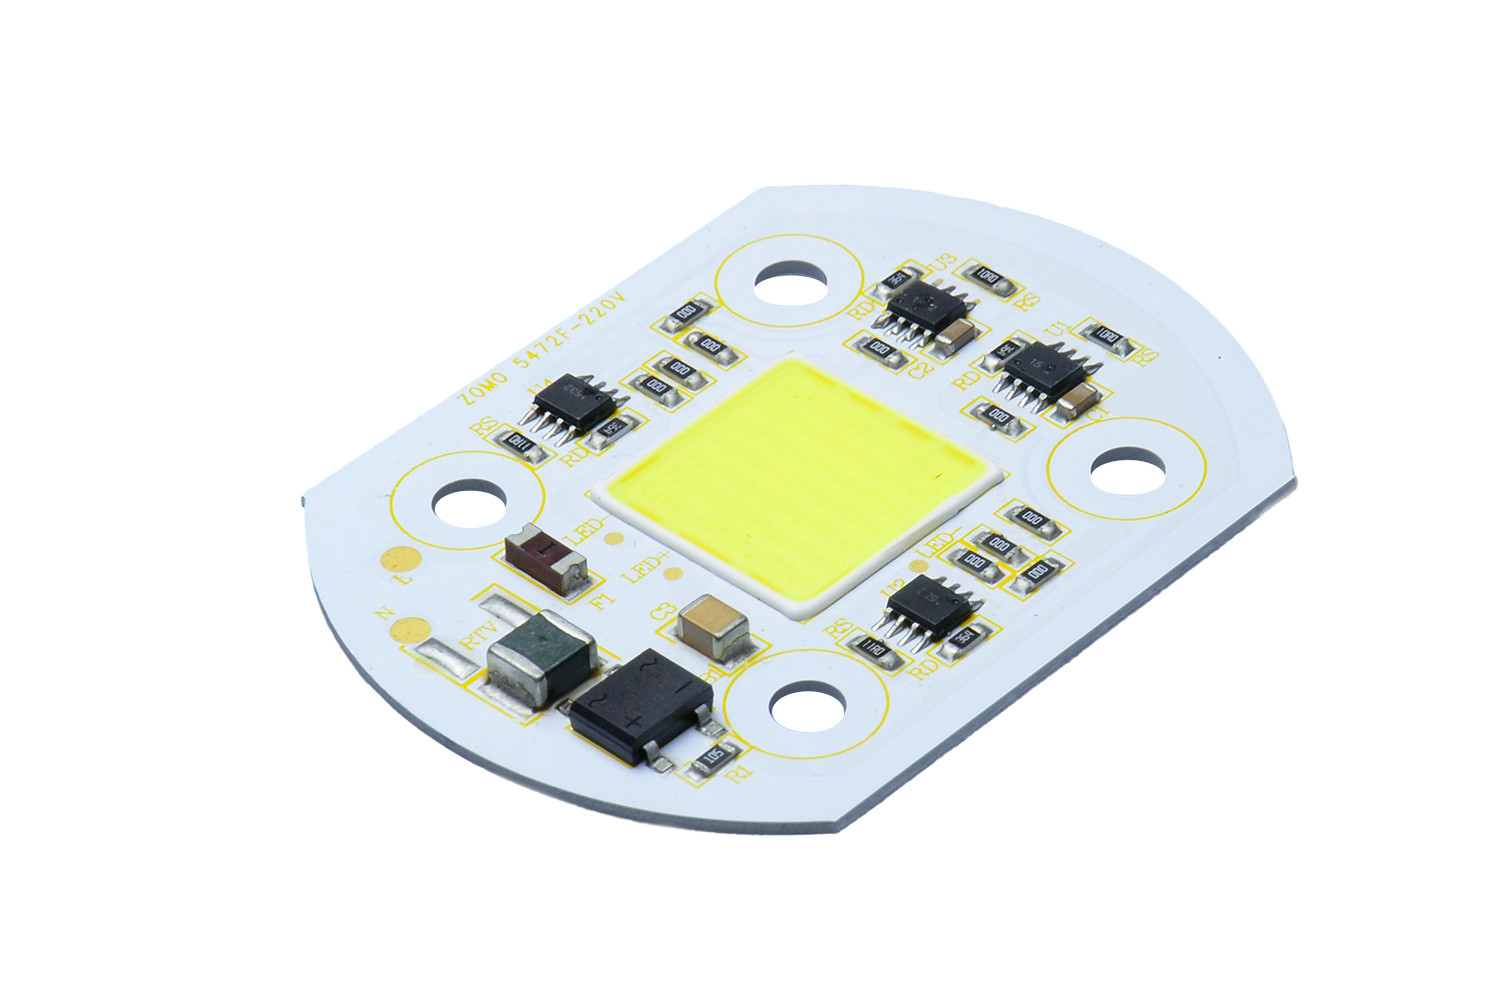 Natural White High CRI 110lm/w DOB SMD LED Module